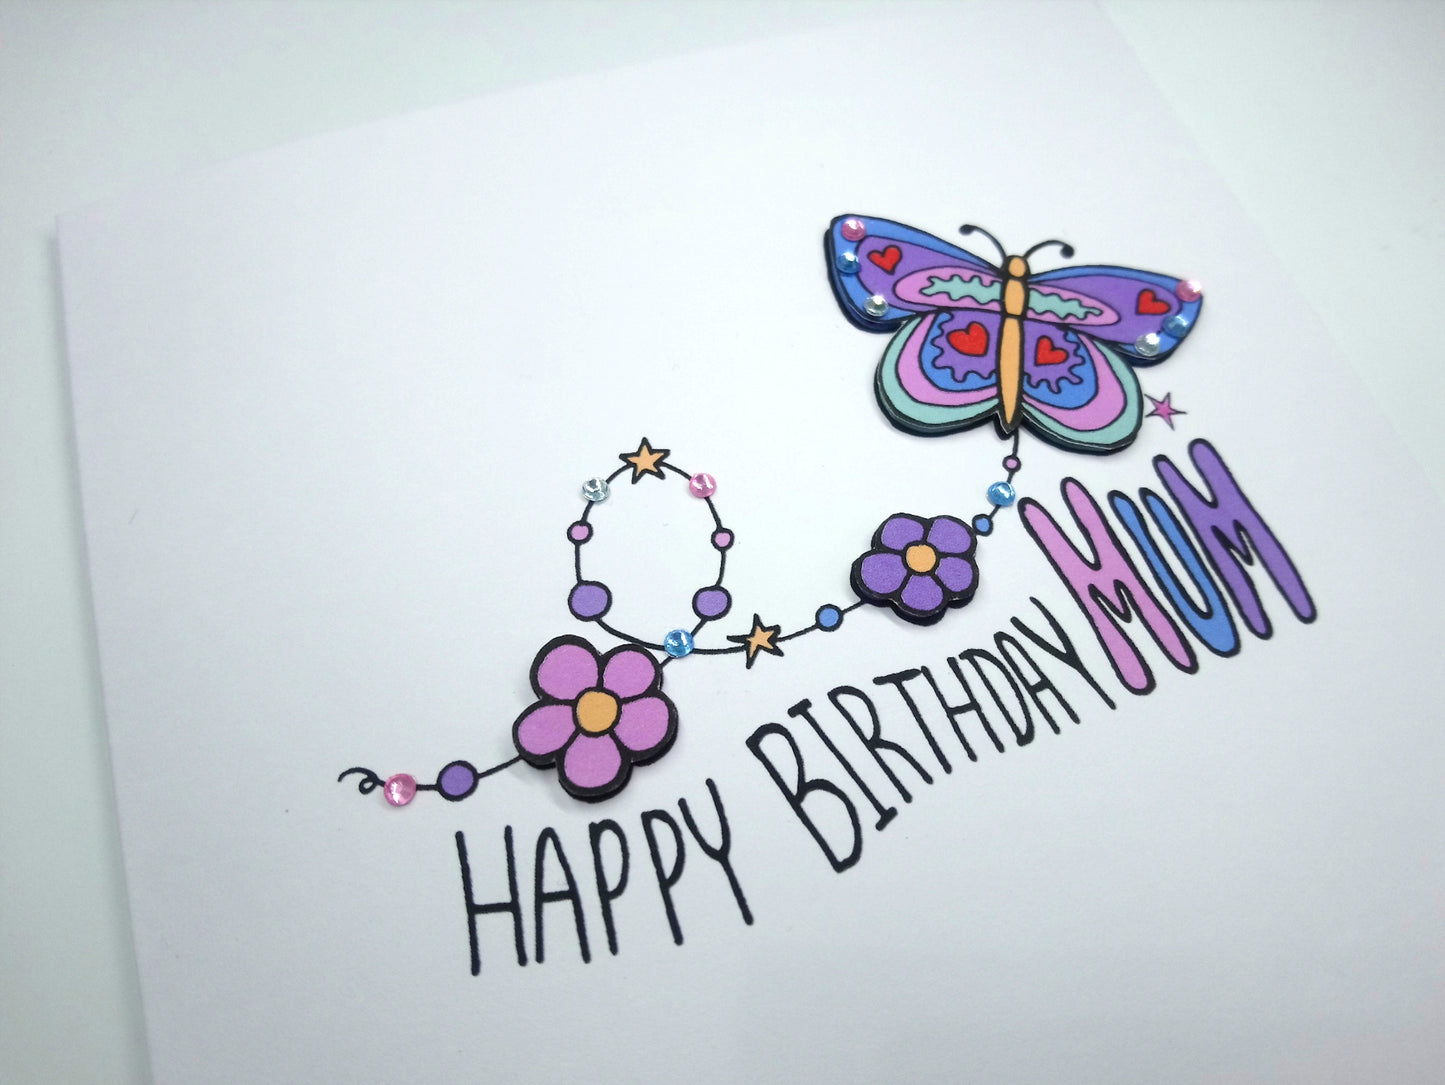 Butterfly Mum Happy Birthday Card